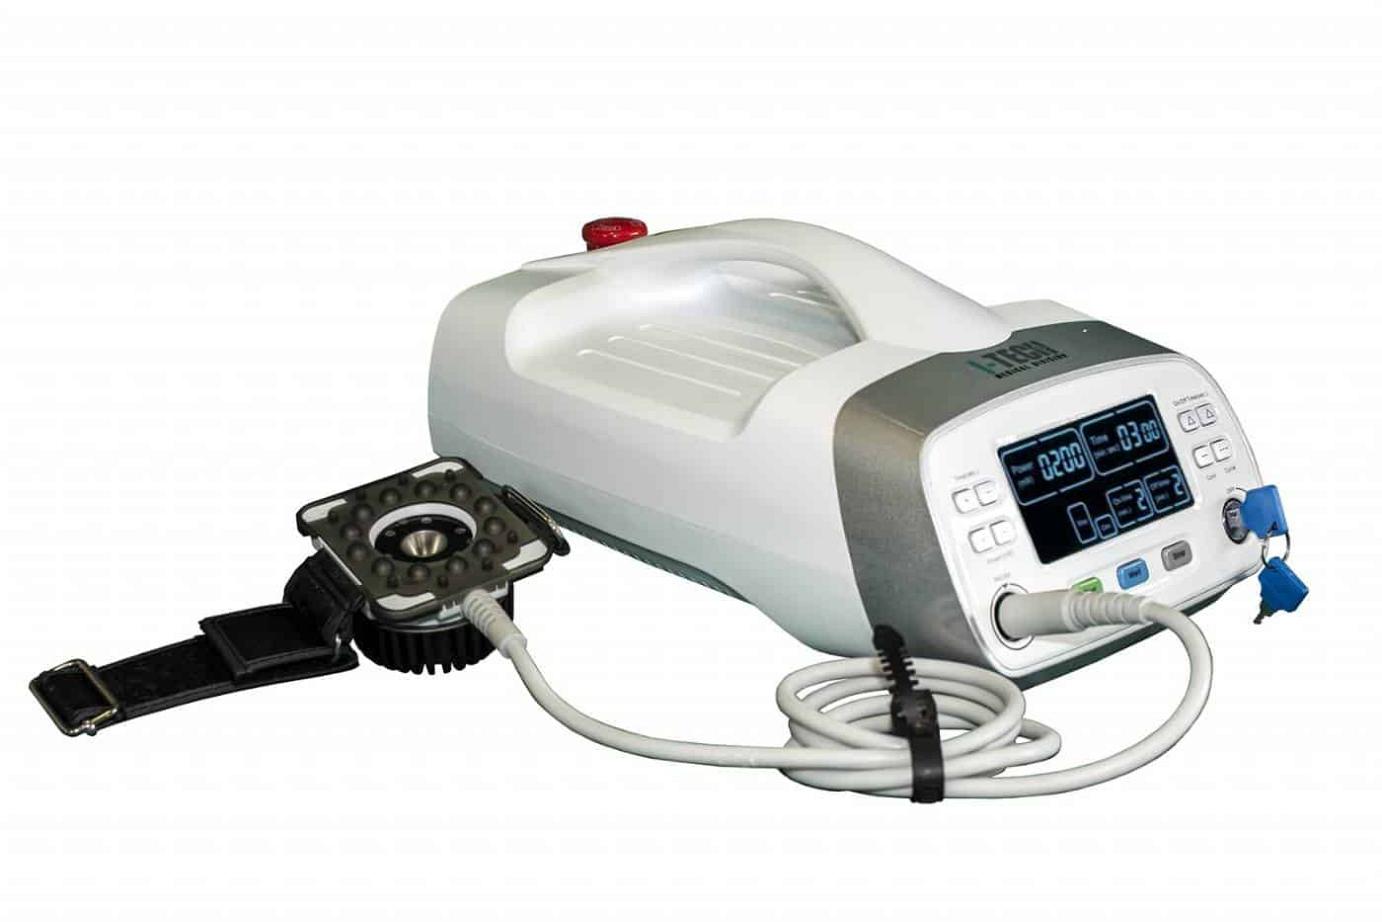 I-Tech Θεραπευτικό Laser Σημειακής Εφαρμογής LA 500 i-Tech